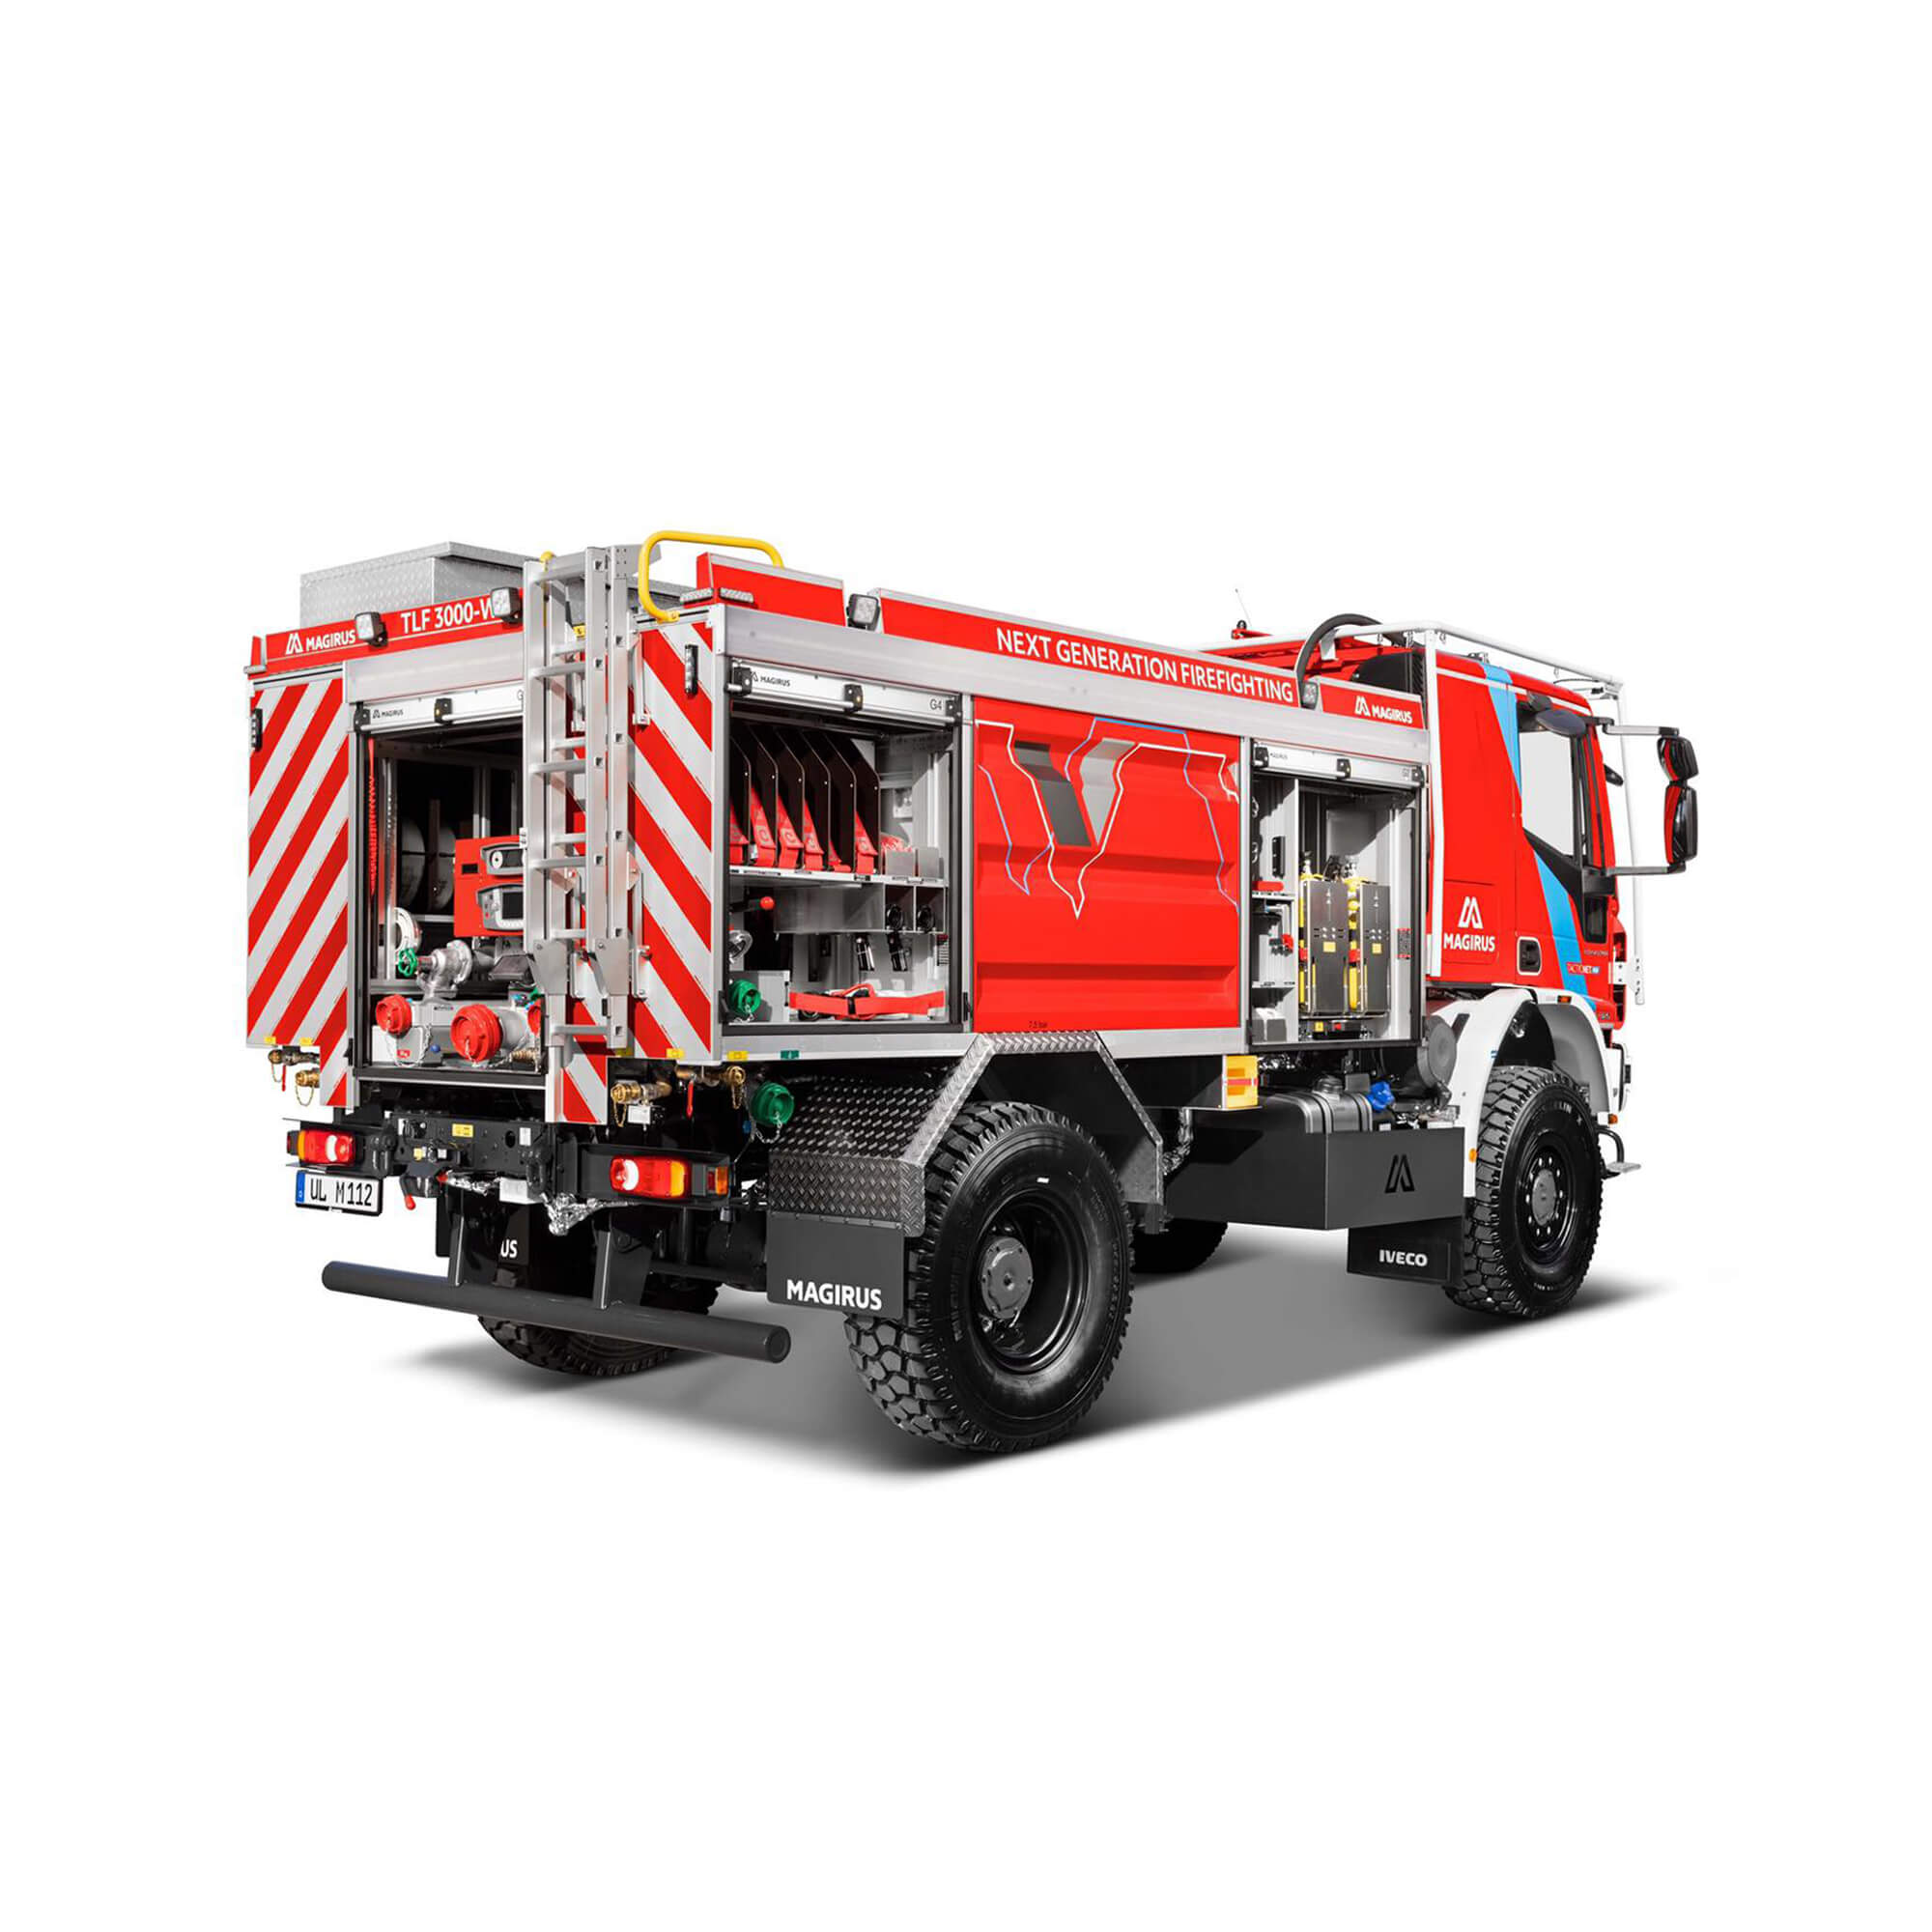 Wildland firefighting vehicle Magirus TLF 3000-W